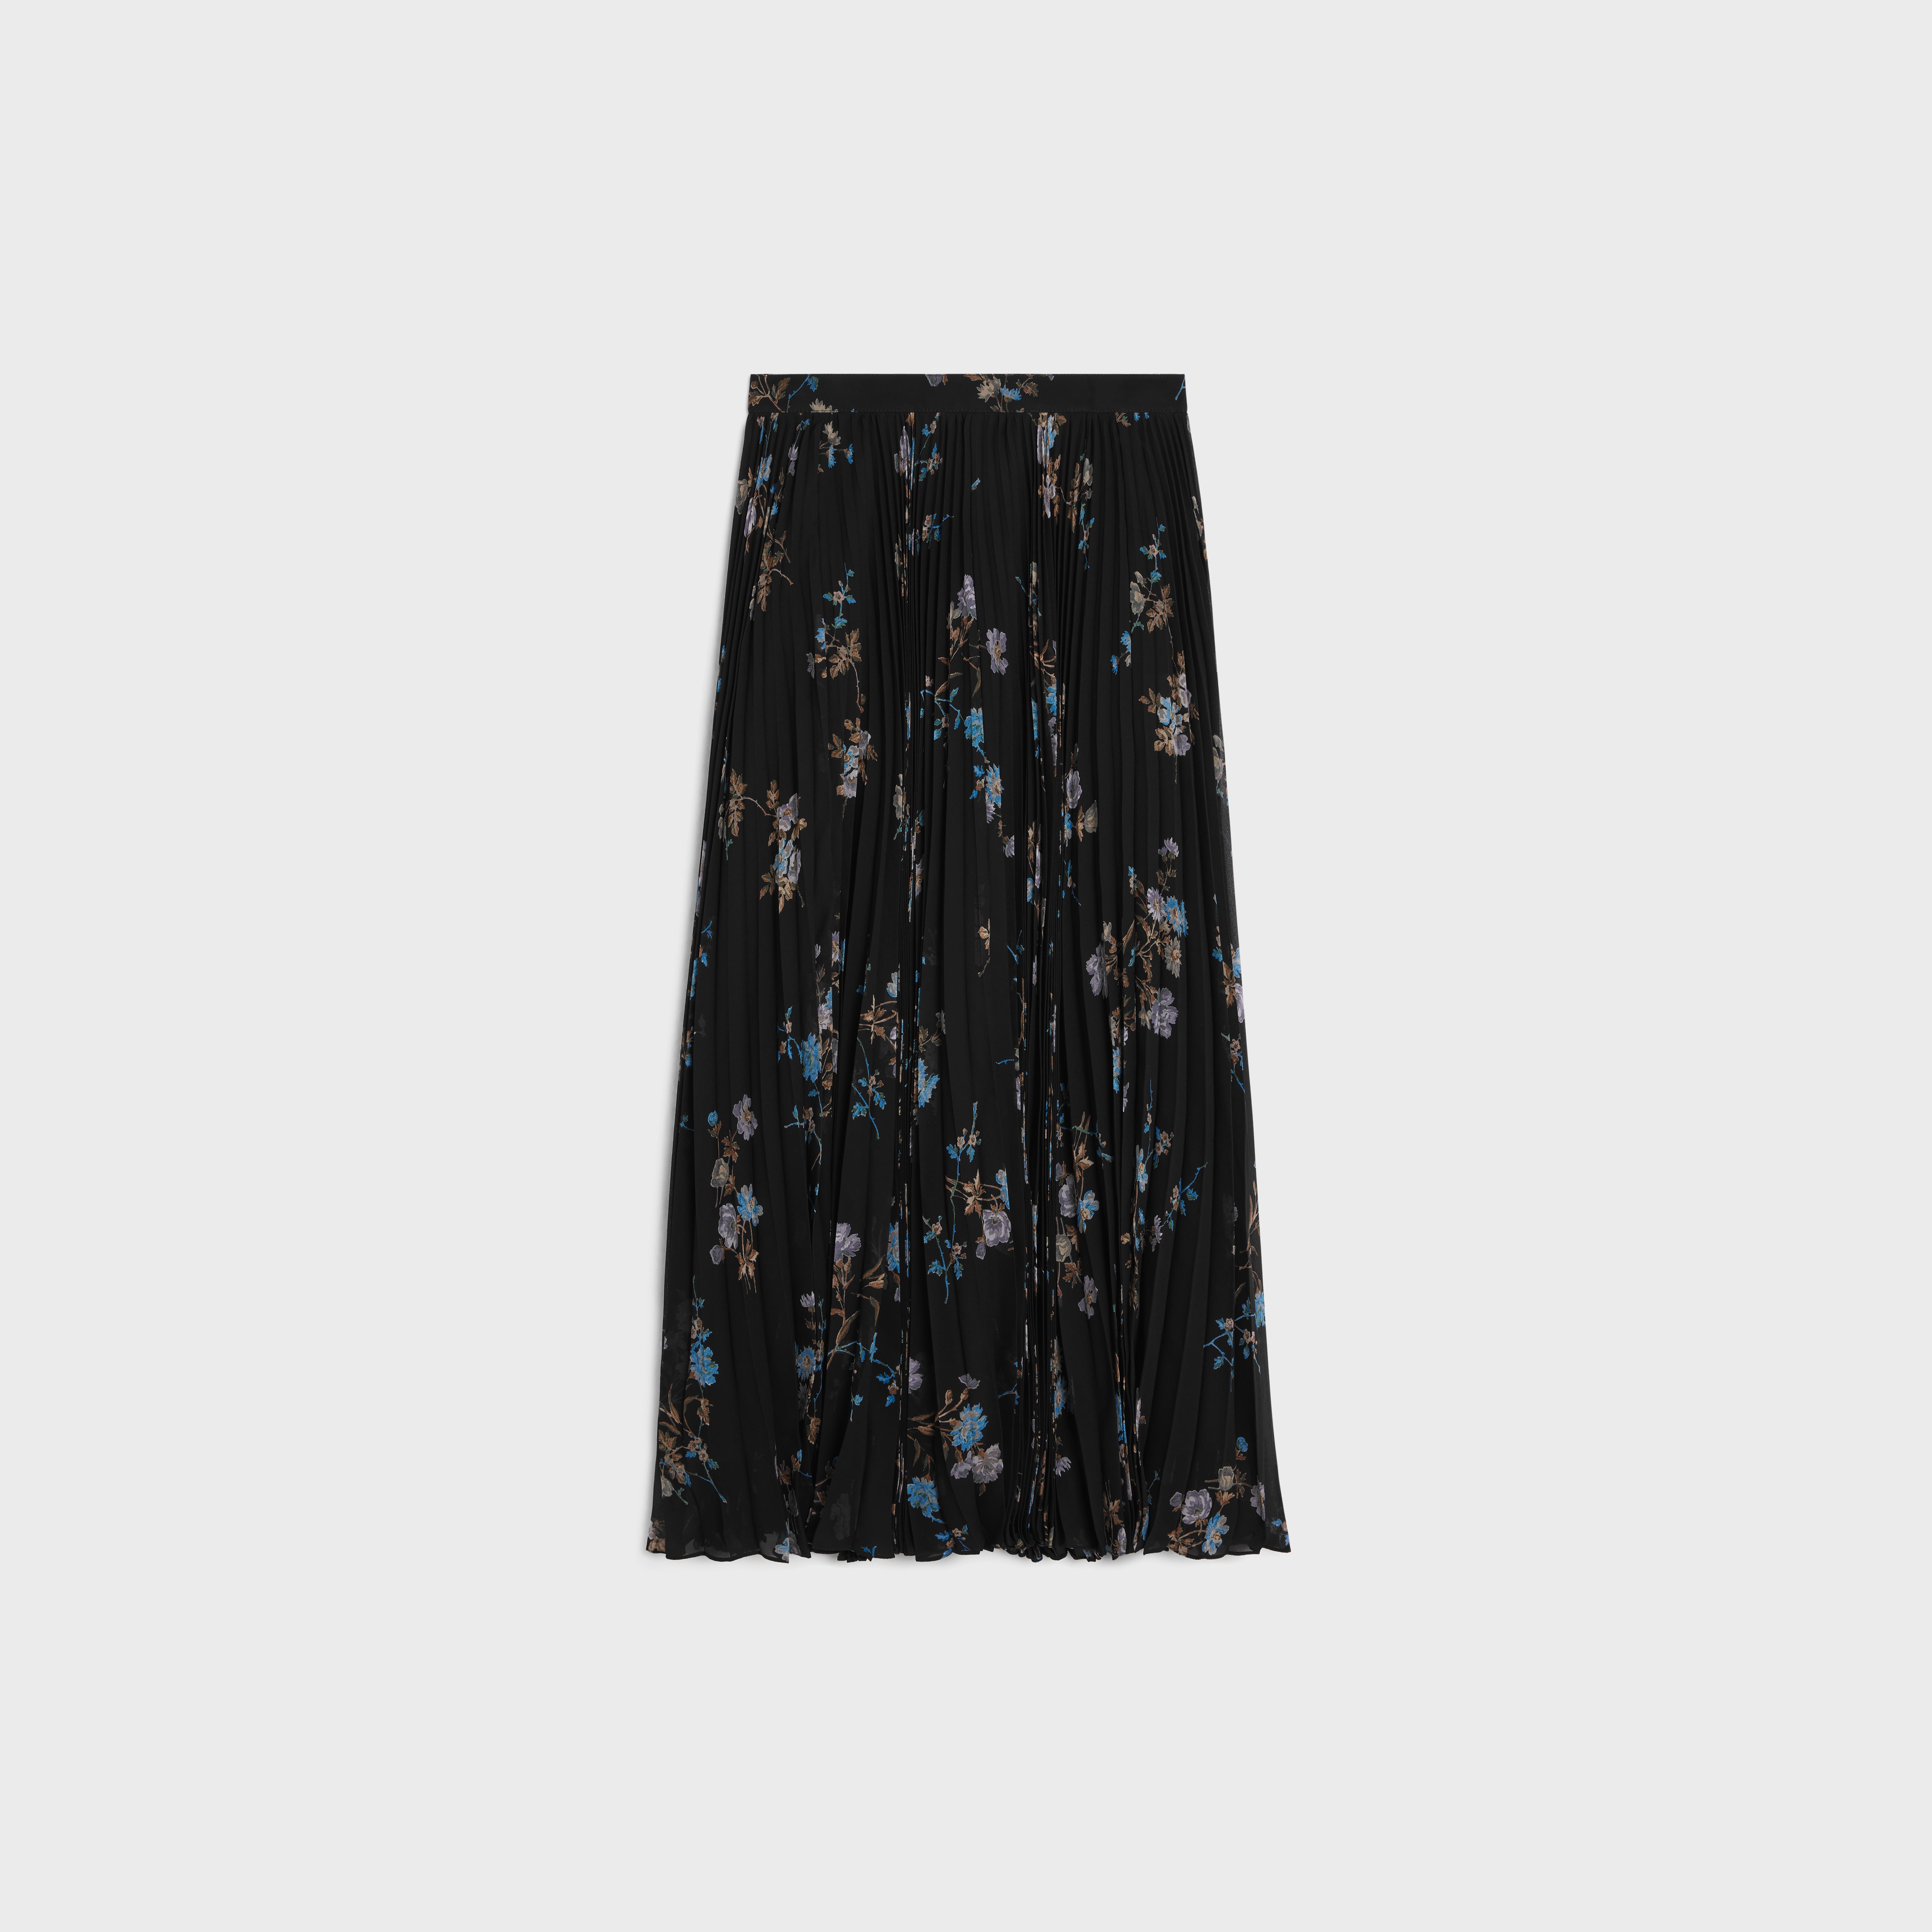 skirt with sunburst pleats in silk georgette - 1